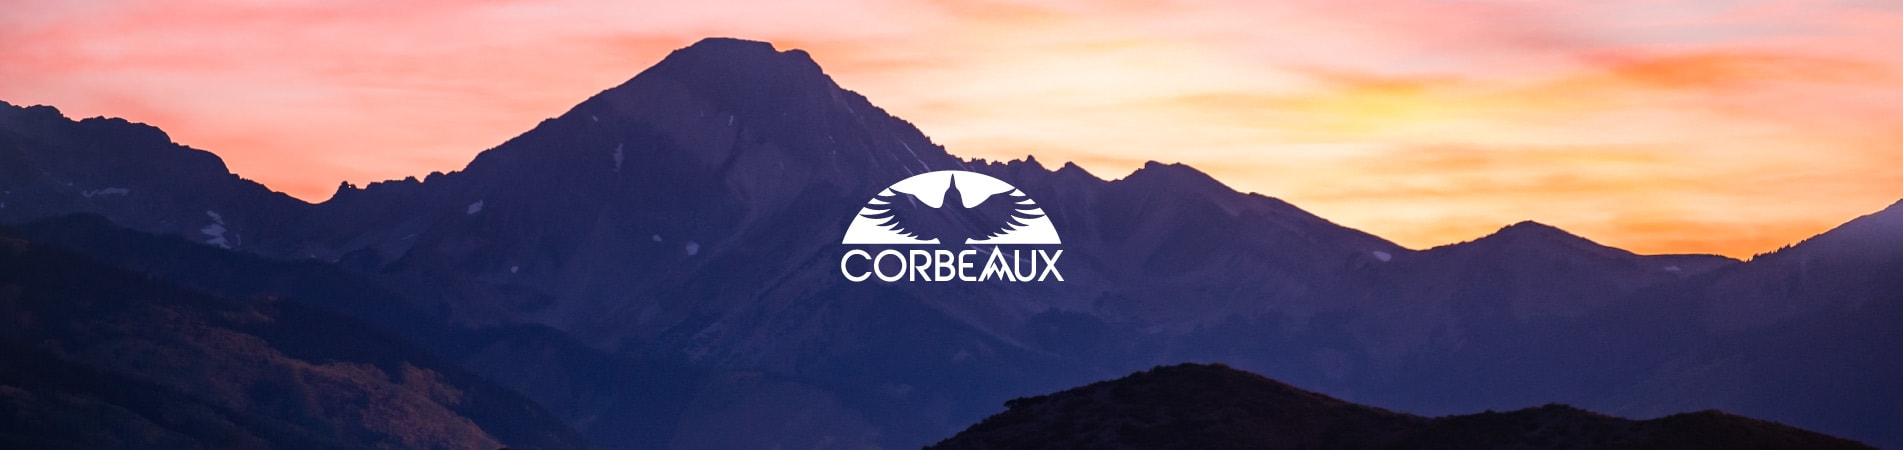 corbeaux-brand-banner1.jpg